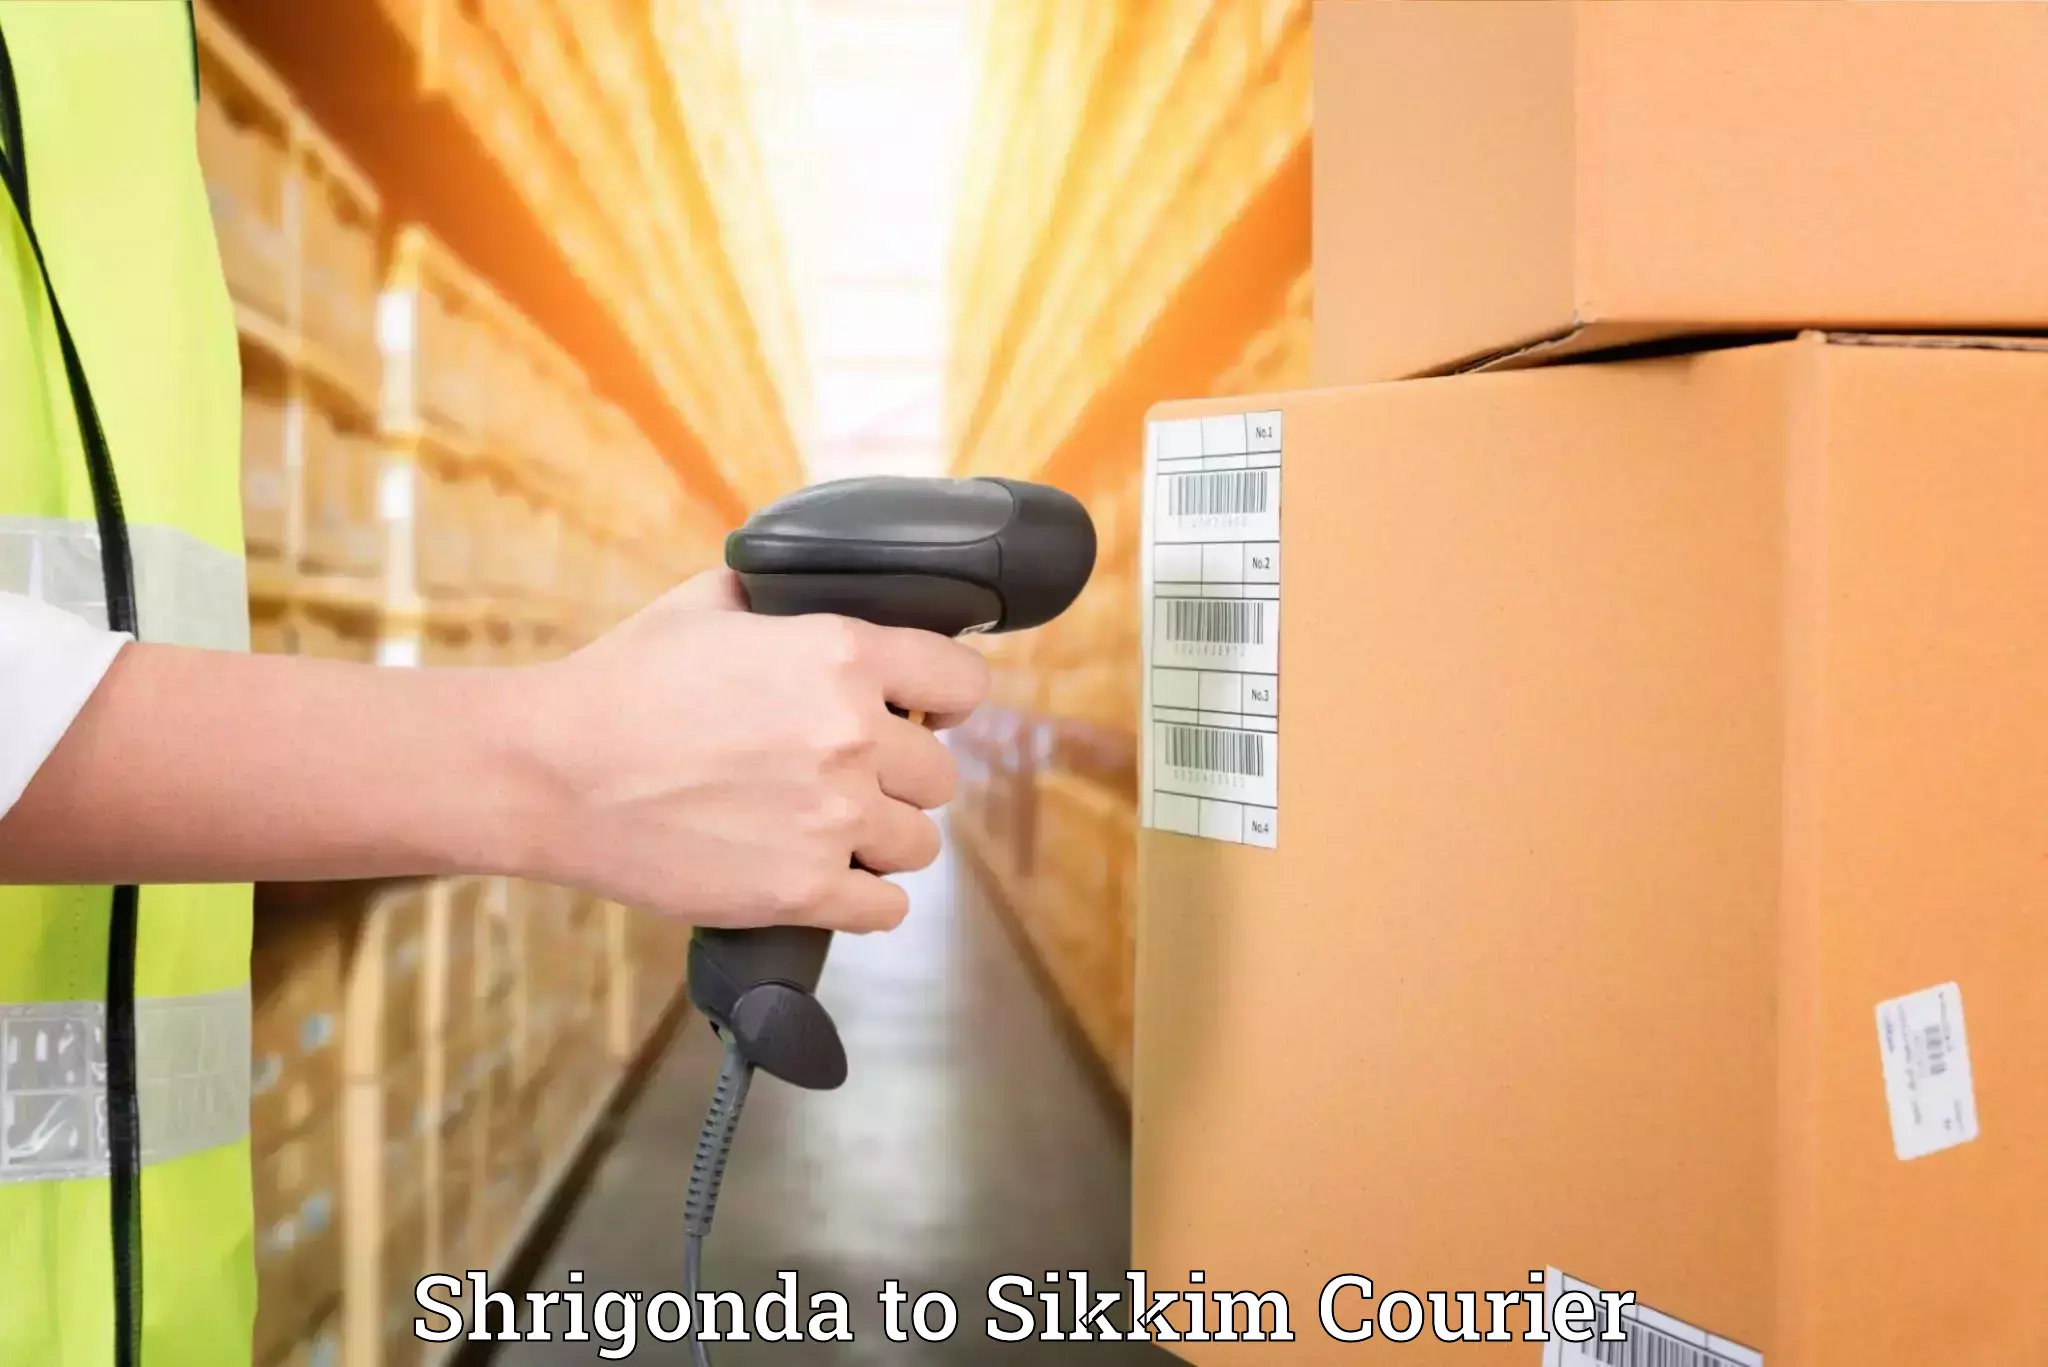 Quality moving and storage in Shrigonda to Pelling